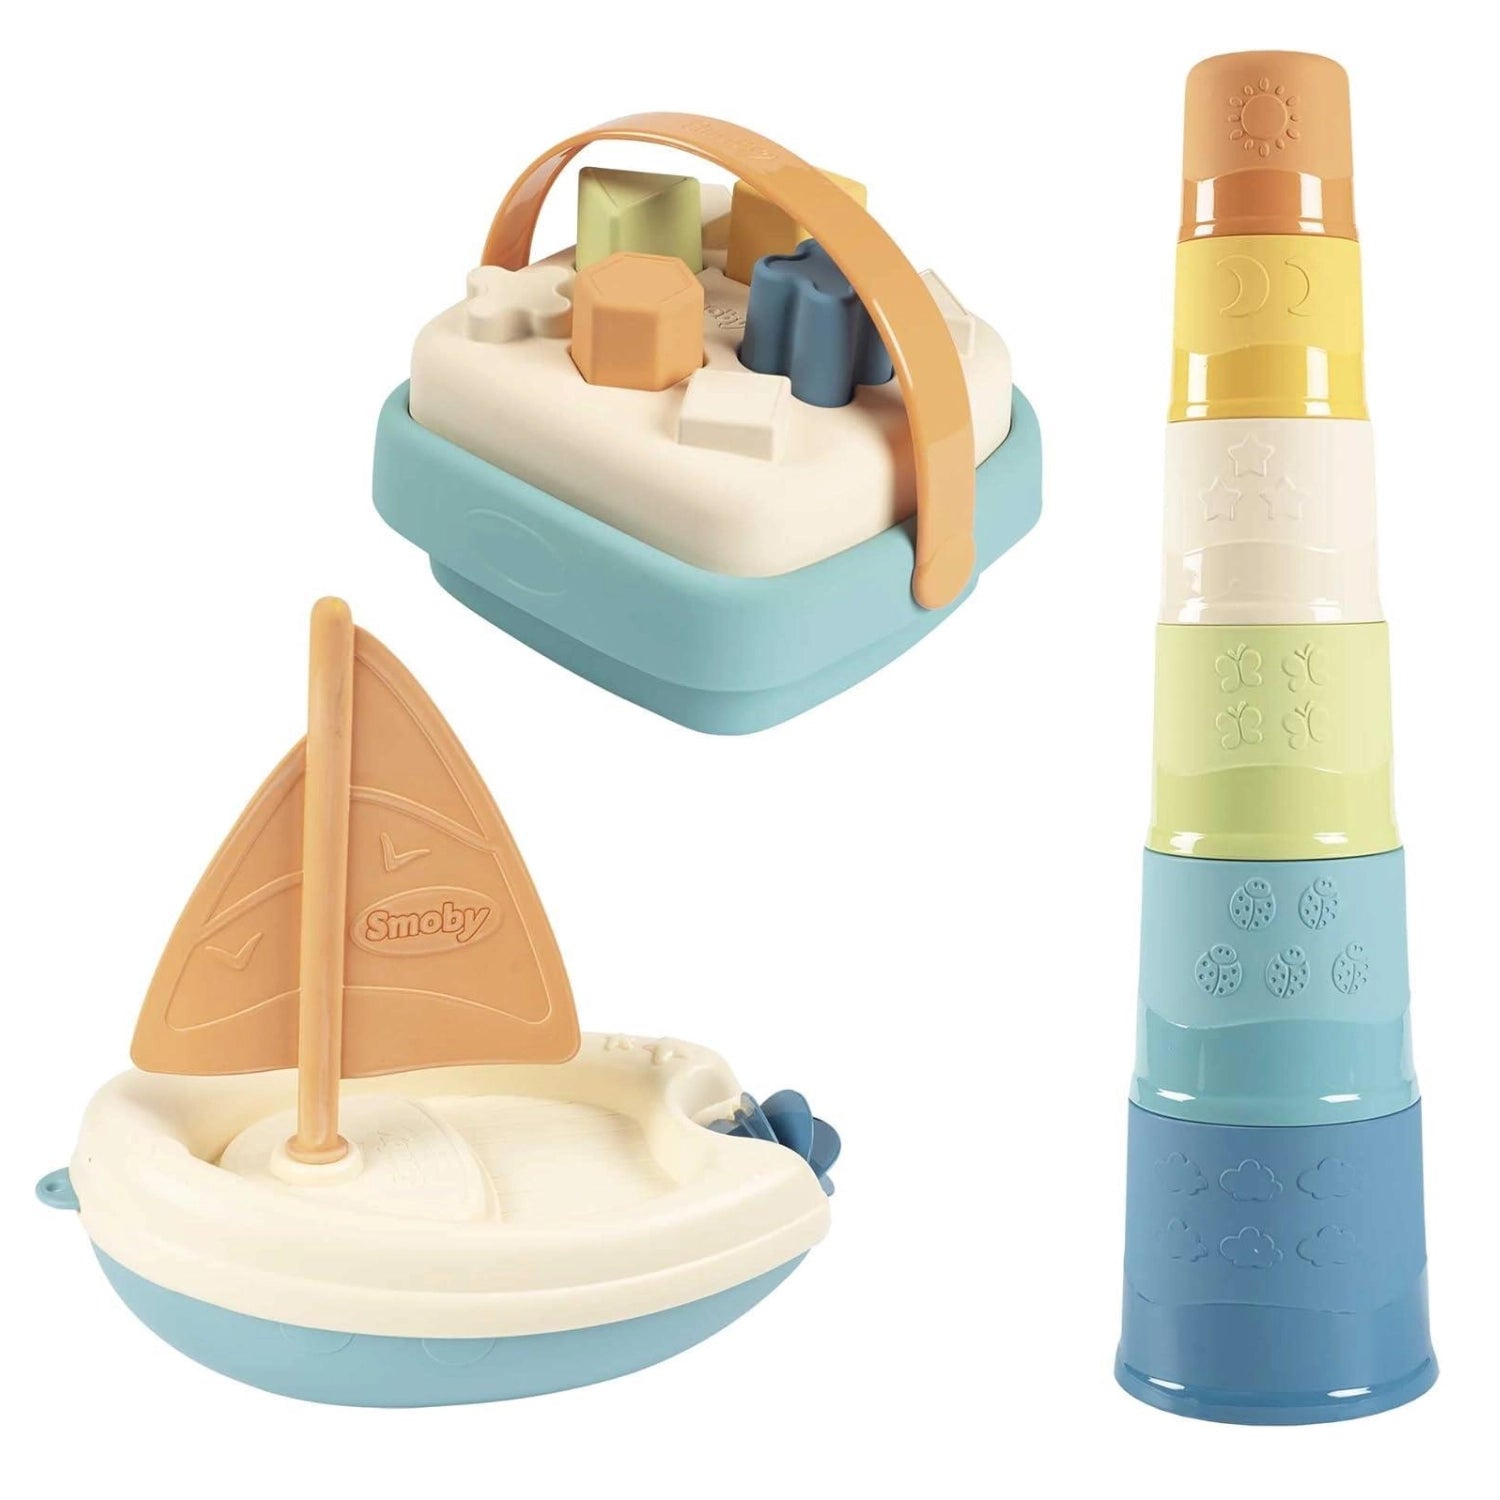 Smoby Little Smoby Oyuncak Yelkenli Tekne 140605 | Toysall